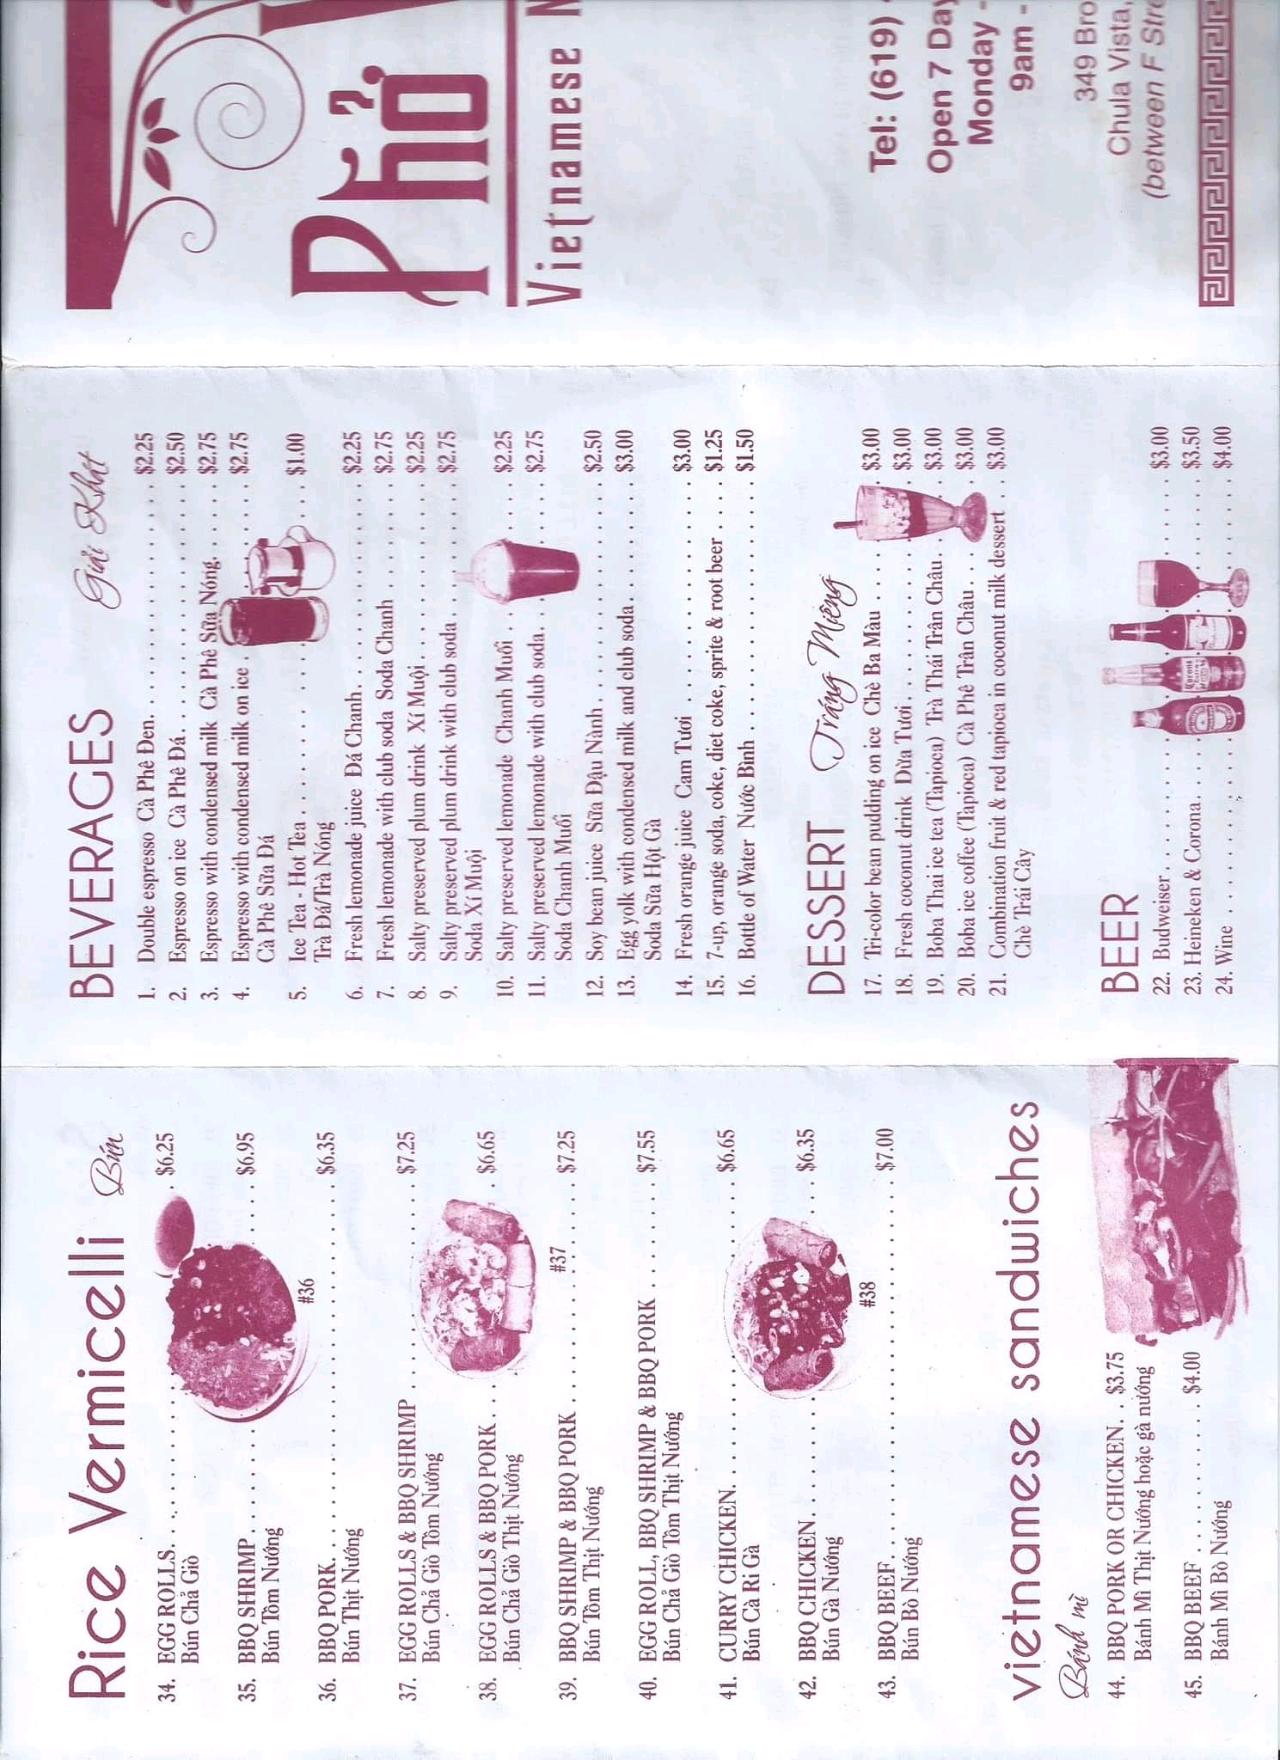 San Diego #ChulaVista #Vietnamese #Phở restaurant #menu #boba #milktea #takeout #ubereats +1(619)422-6189 Open 7 days week: MON-SUN  - APRIL 14, 2022 12:27 PST